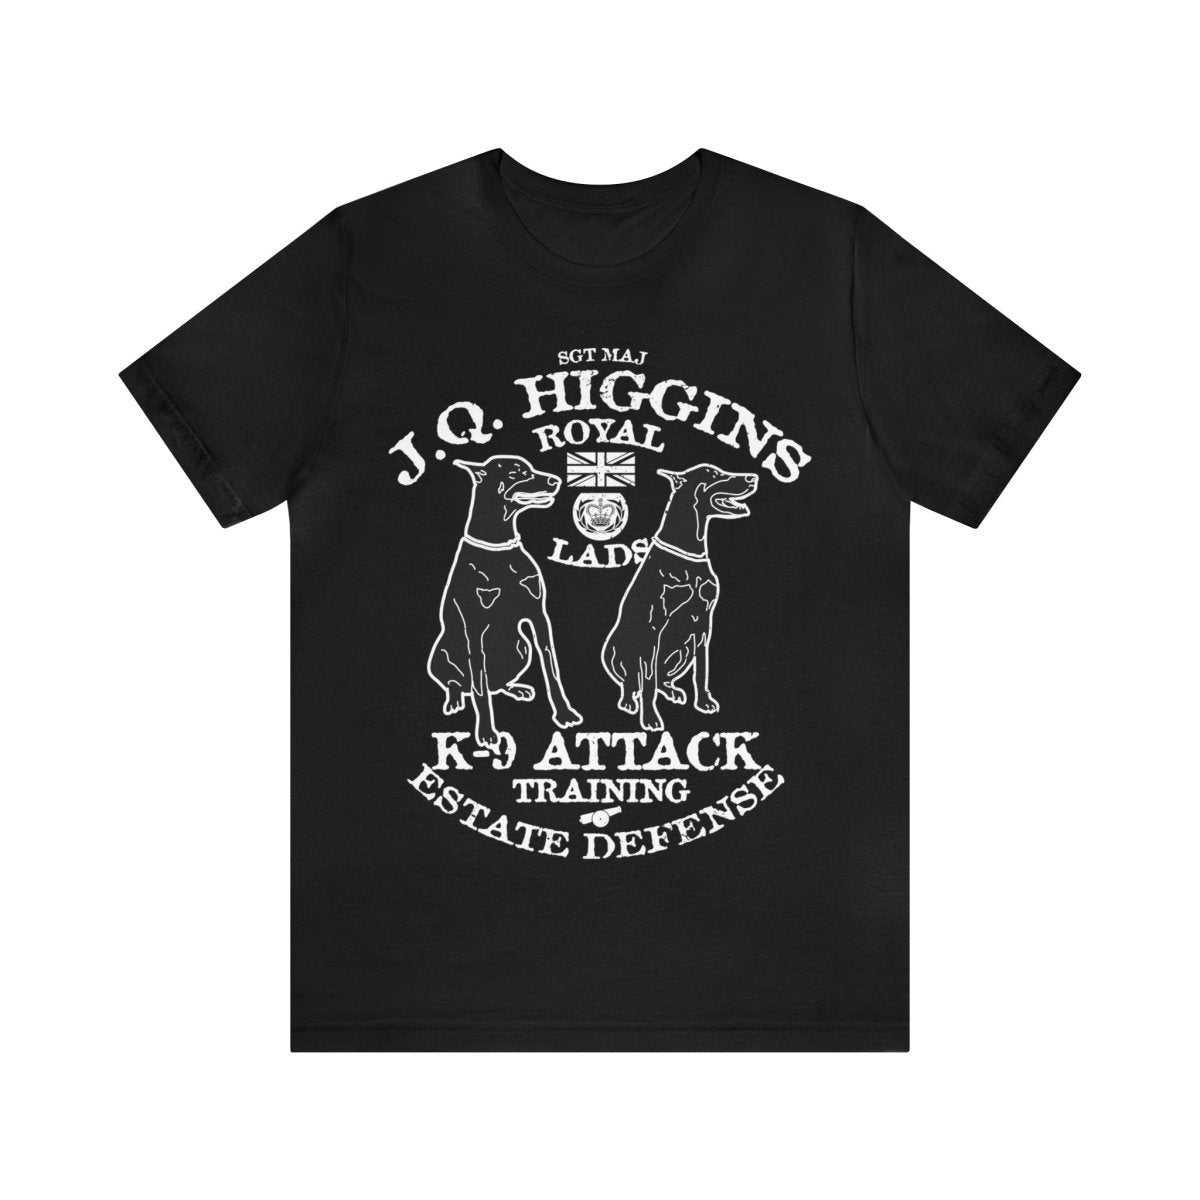 Higgins' Royal Lads Premium T-Shirt, K9 Attack Training, Private Estate Security, Dog Lover Gift